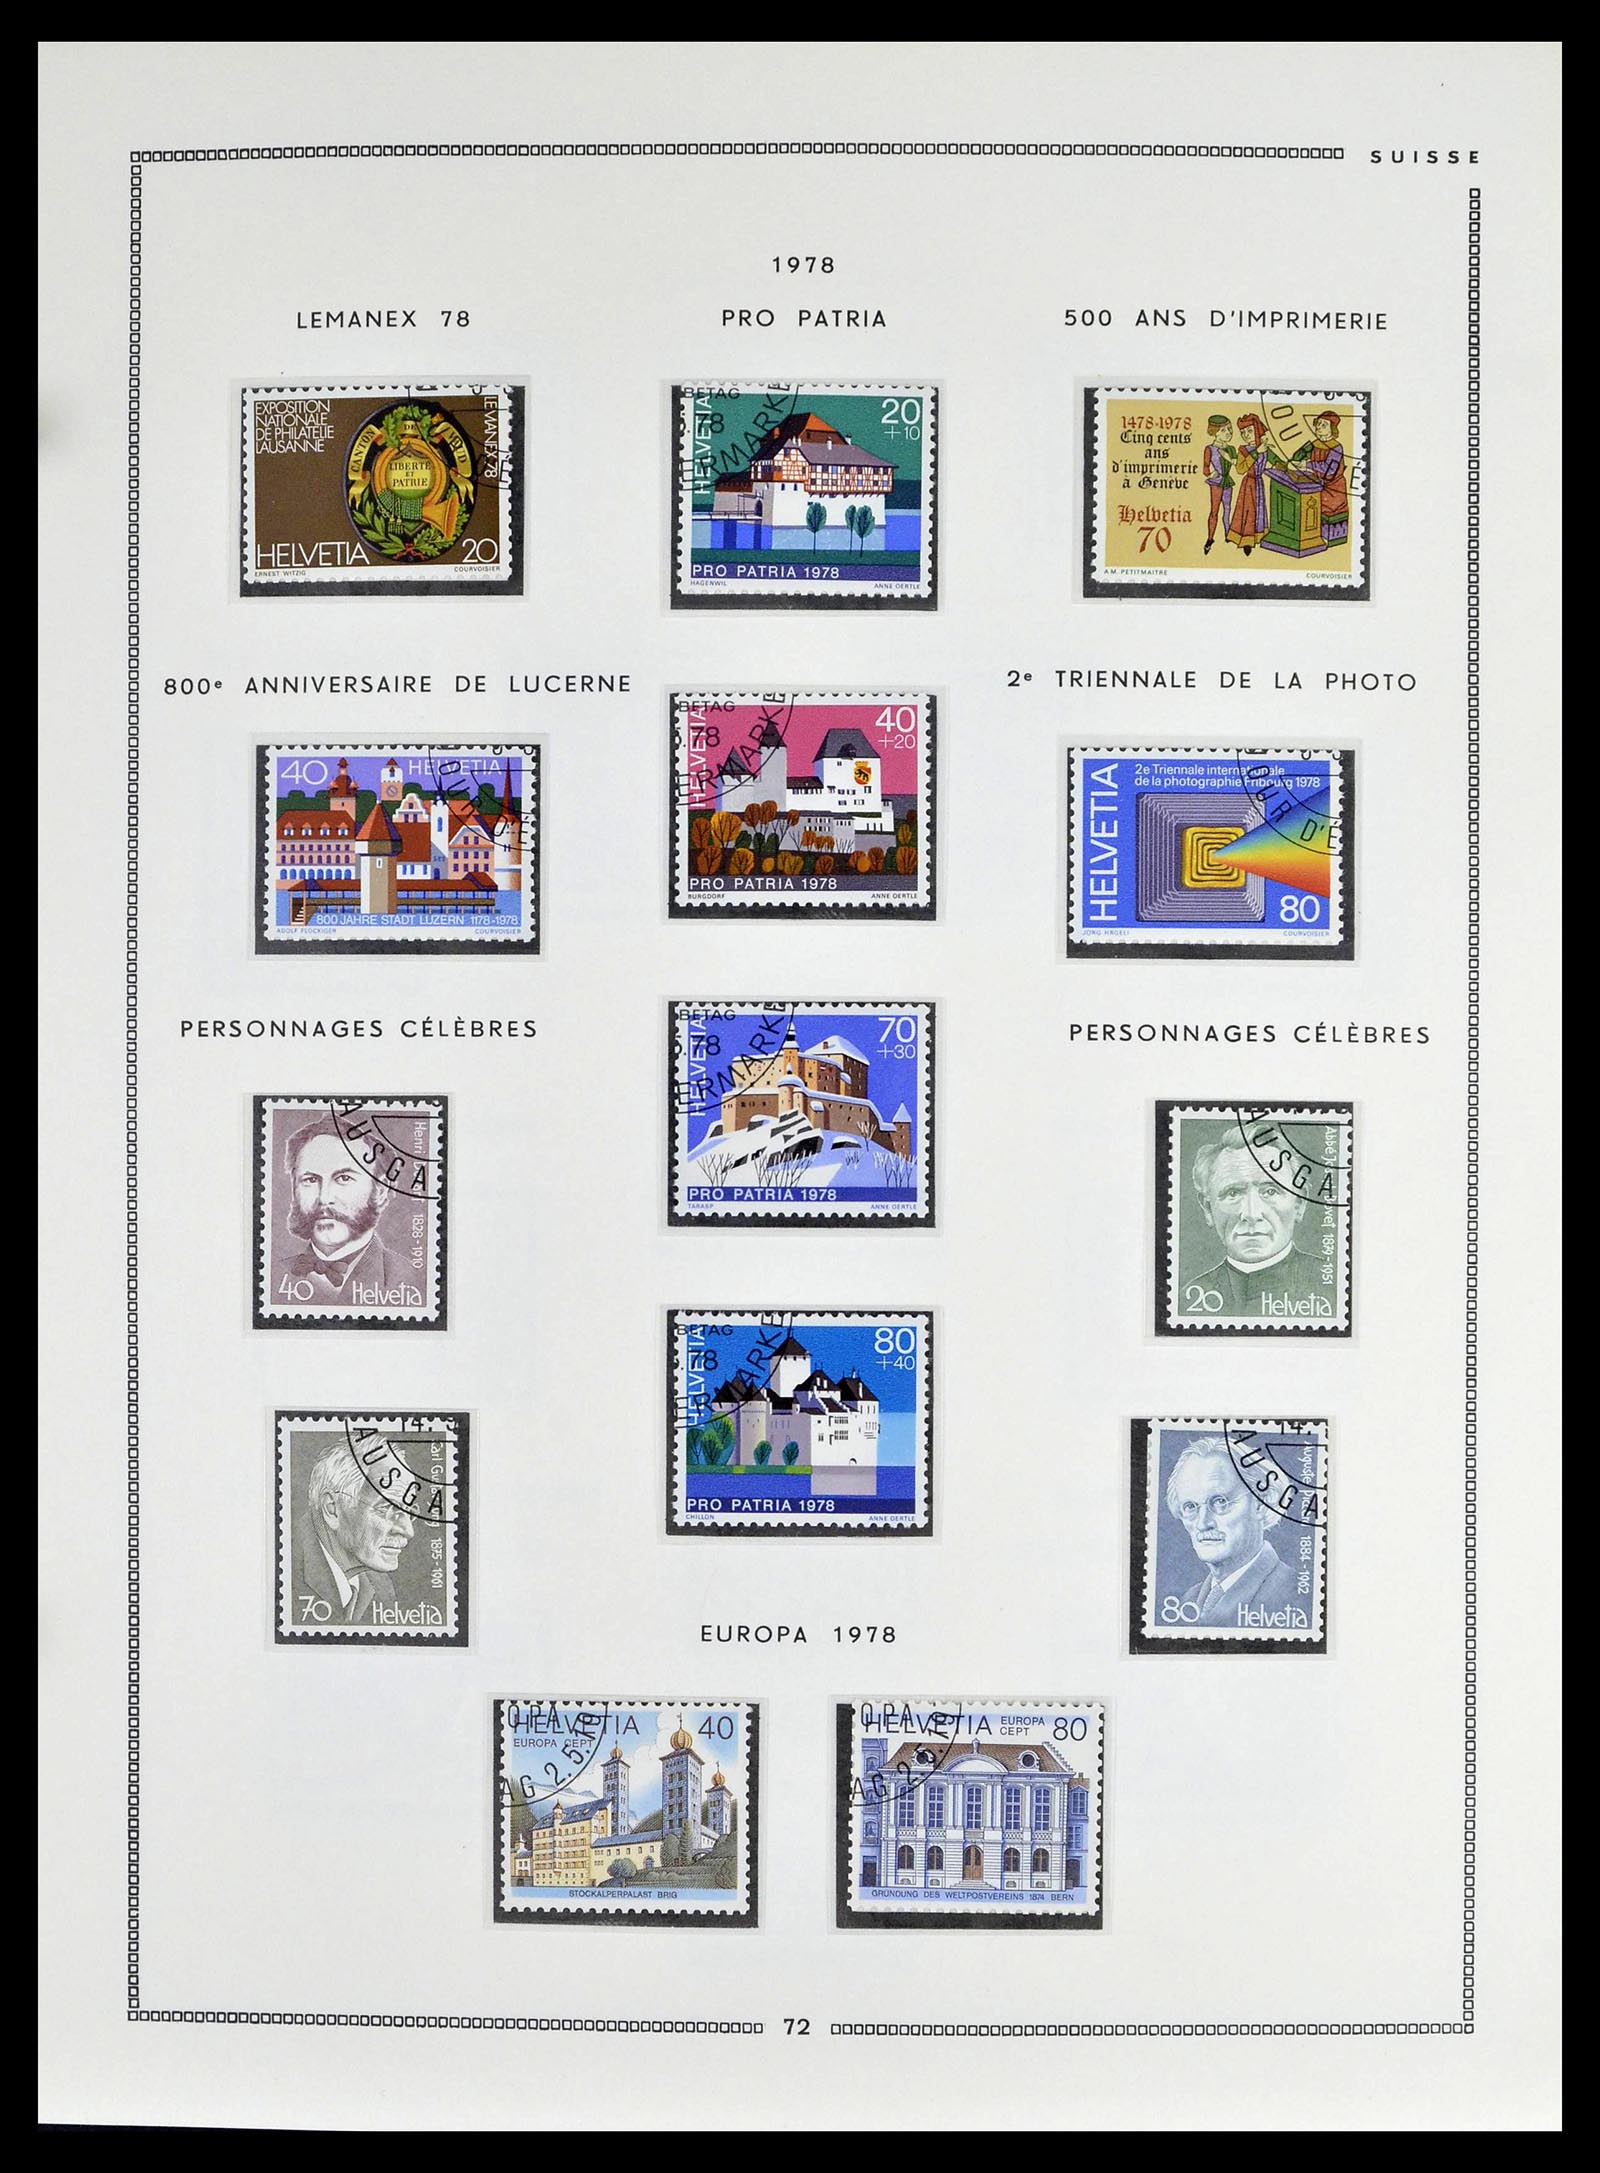 39094 0070 - Stamp collection 39094 Switzerland 1850-2005.